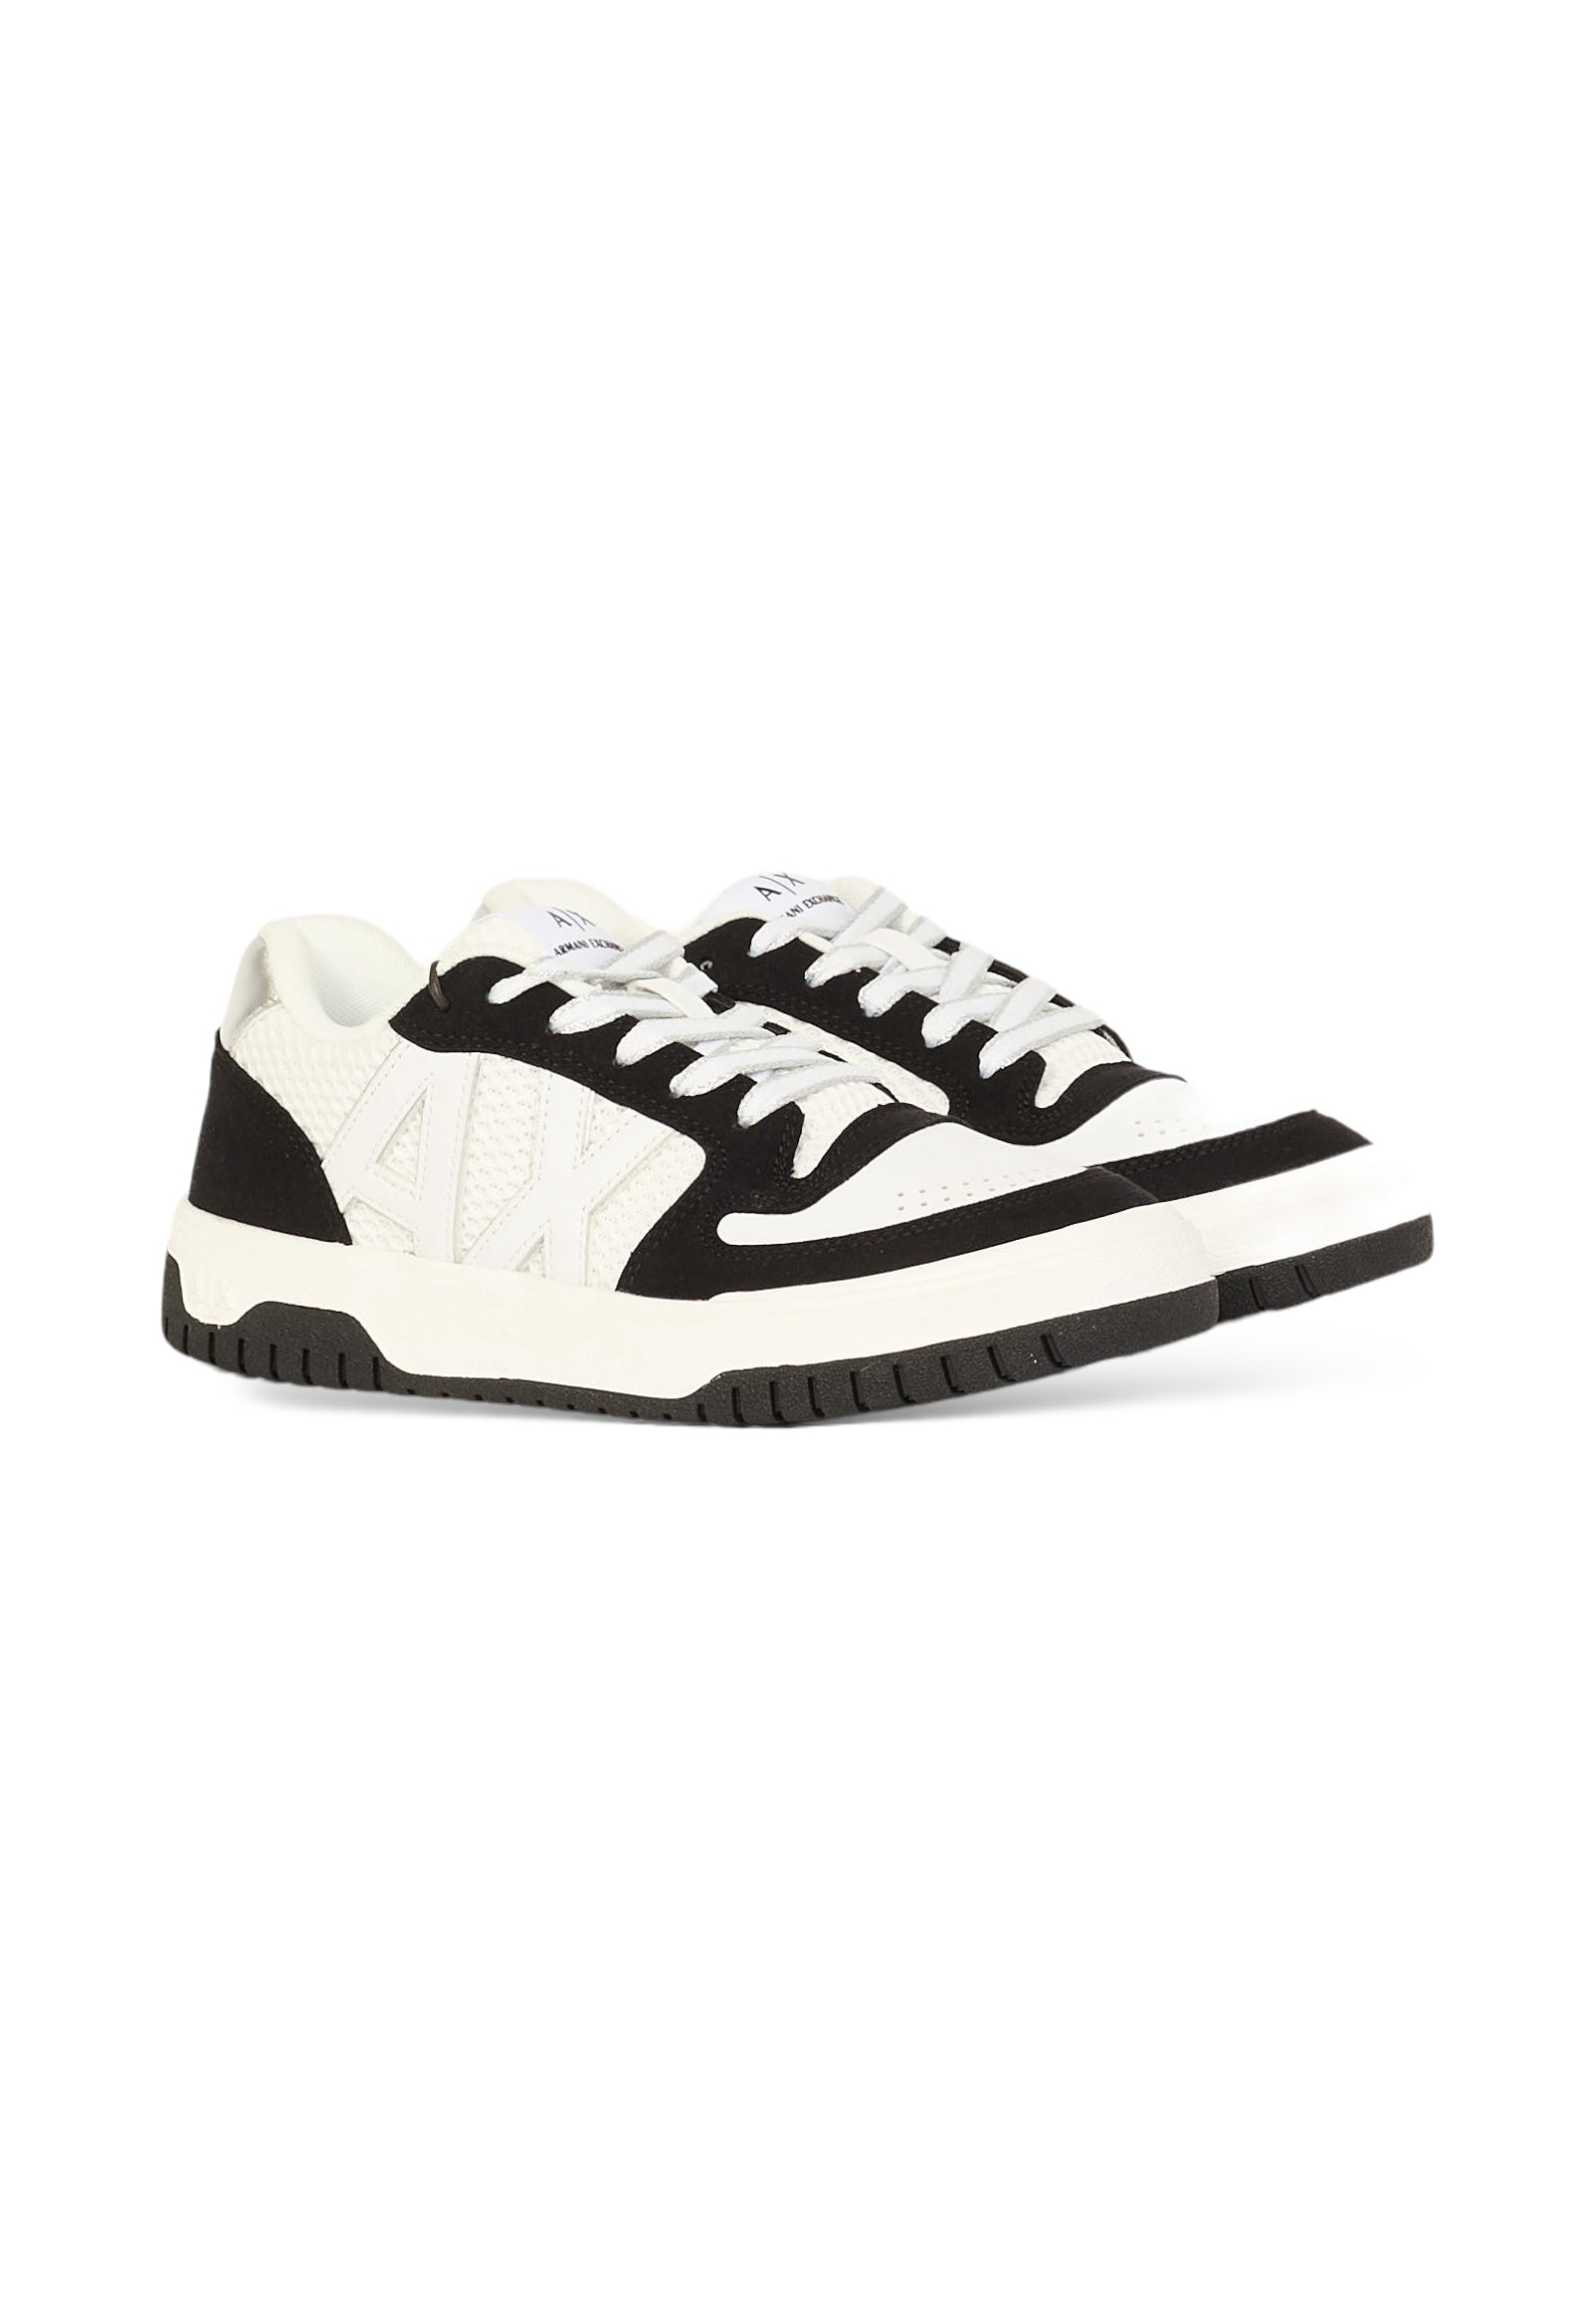 Sneakers Xdx150 Optic WhitE-BlacK-Silver